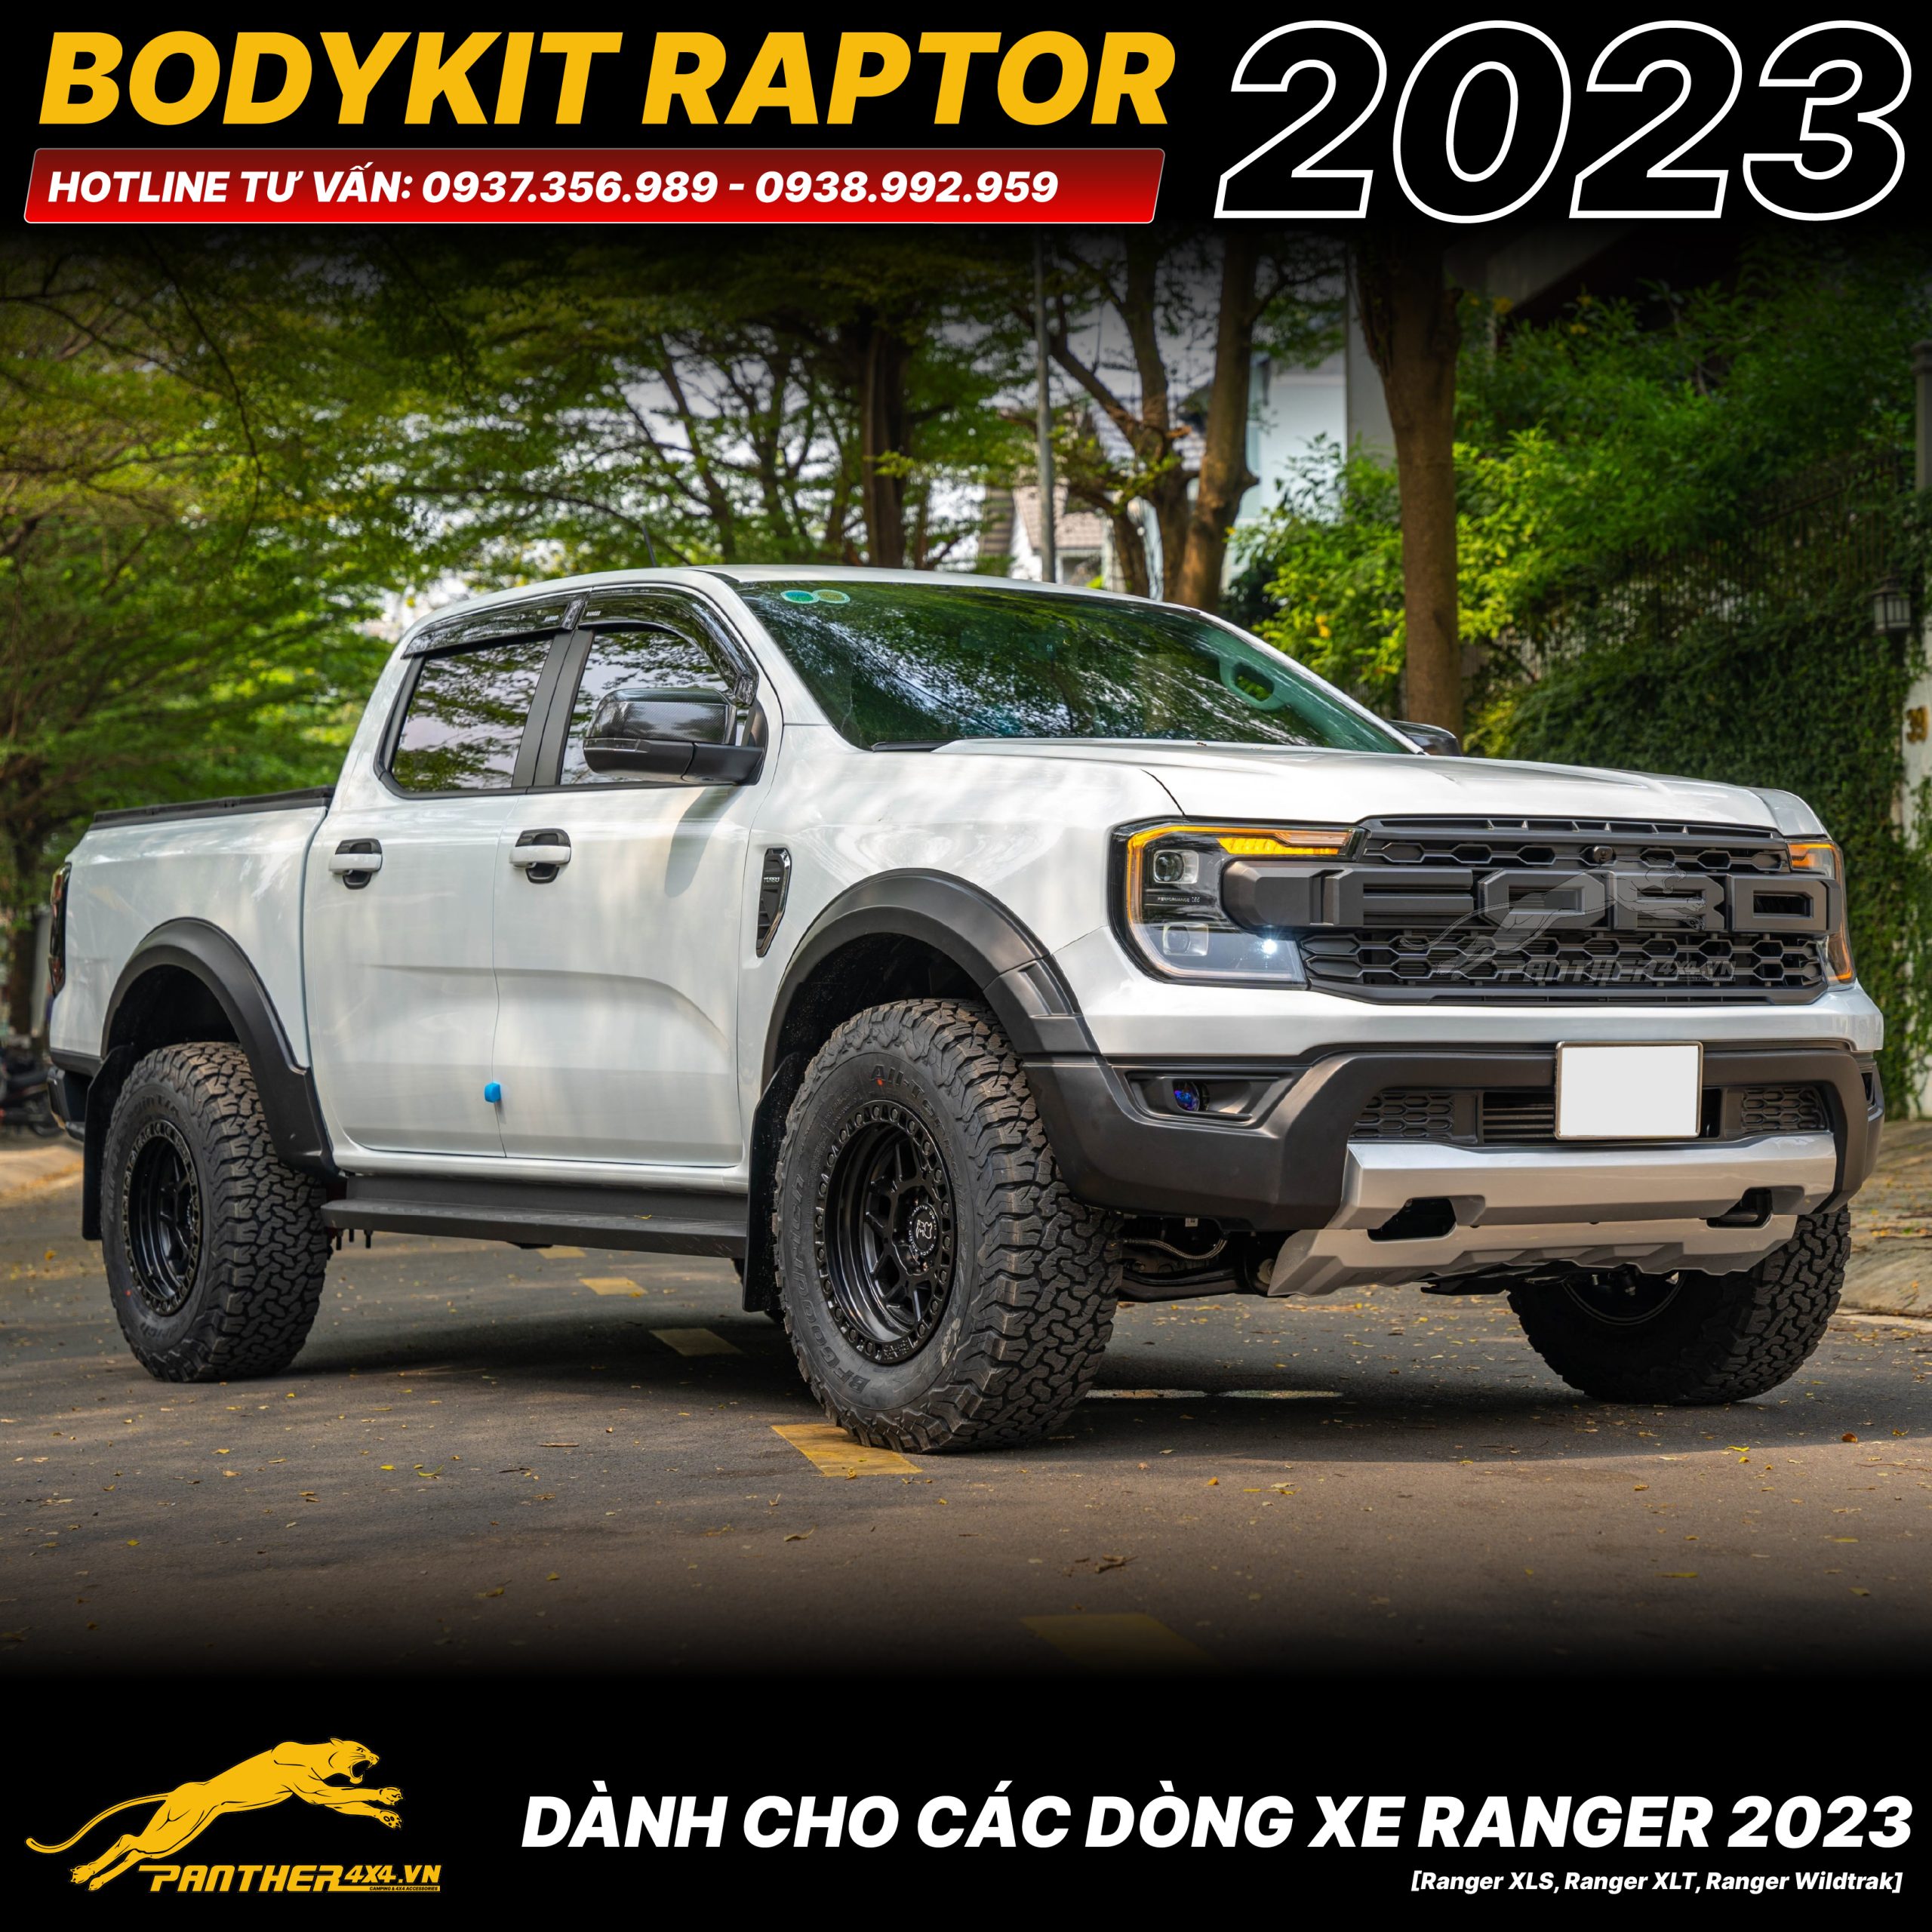 Bodykit Ford Raptor 2023 Next Gen (Ranger Trắng)